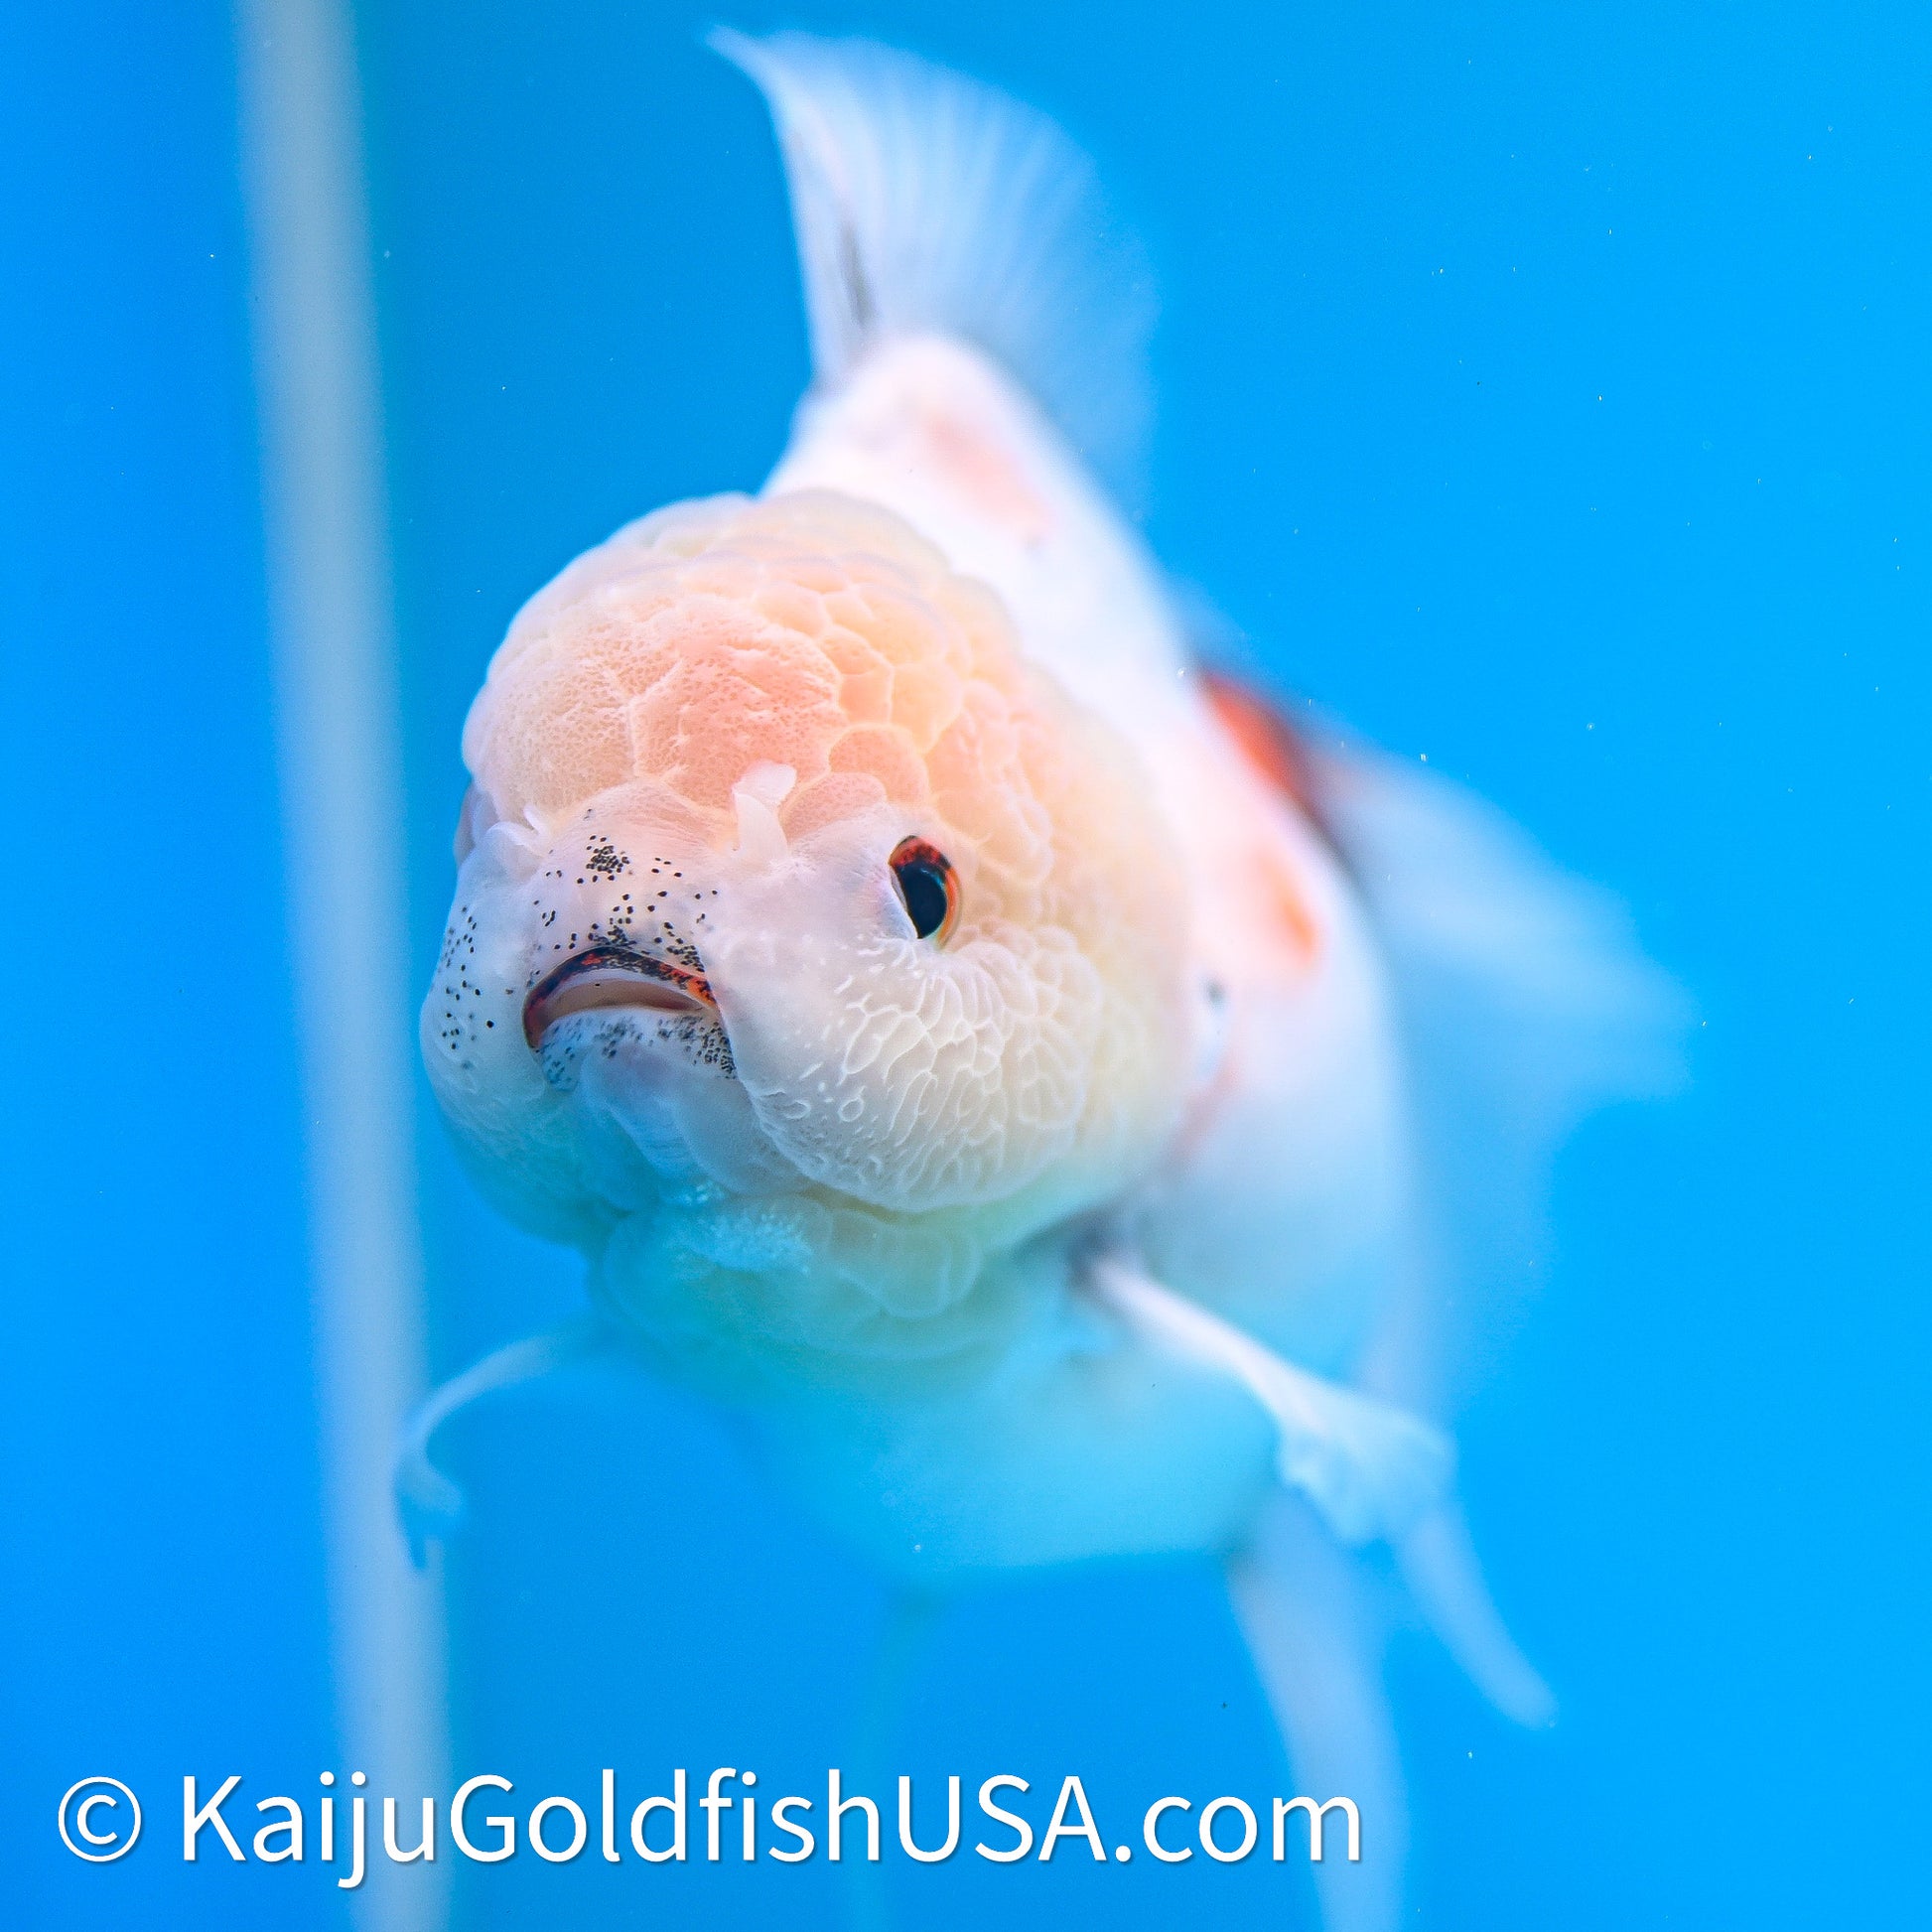 Tricolor Sakura Rose Tail Oranda 4in Body (240628_OR05) - Kaiju Goldfish USA